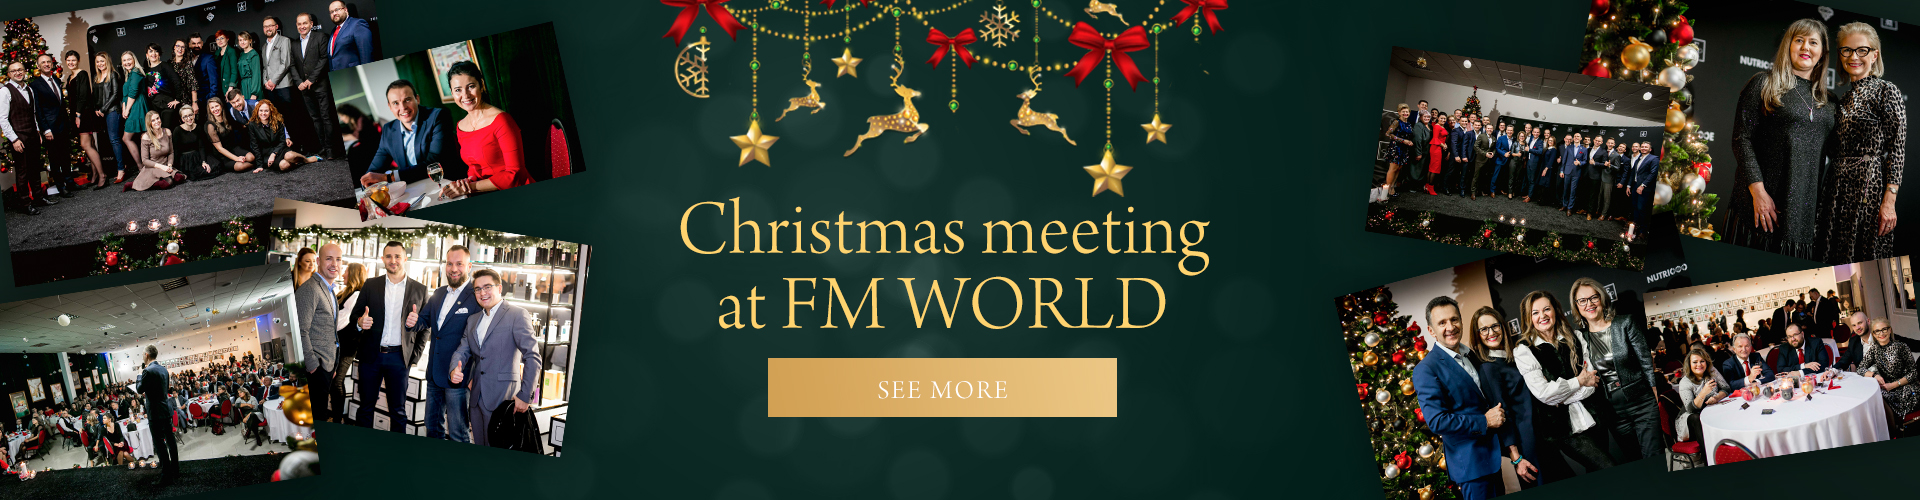 Christmas meeting at FM WORLD